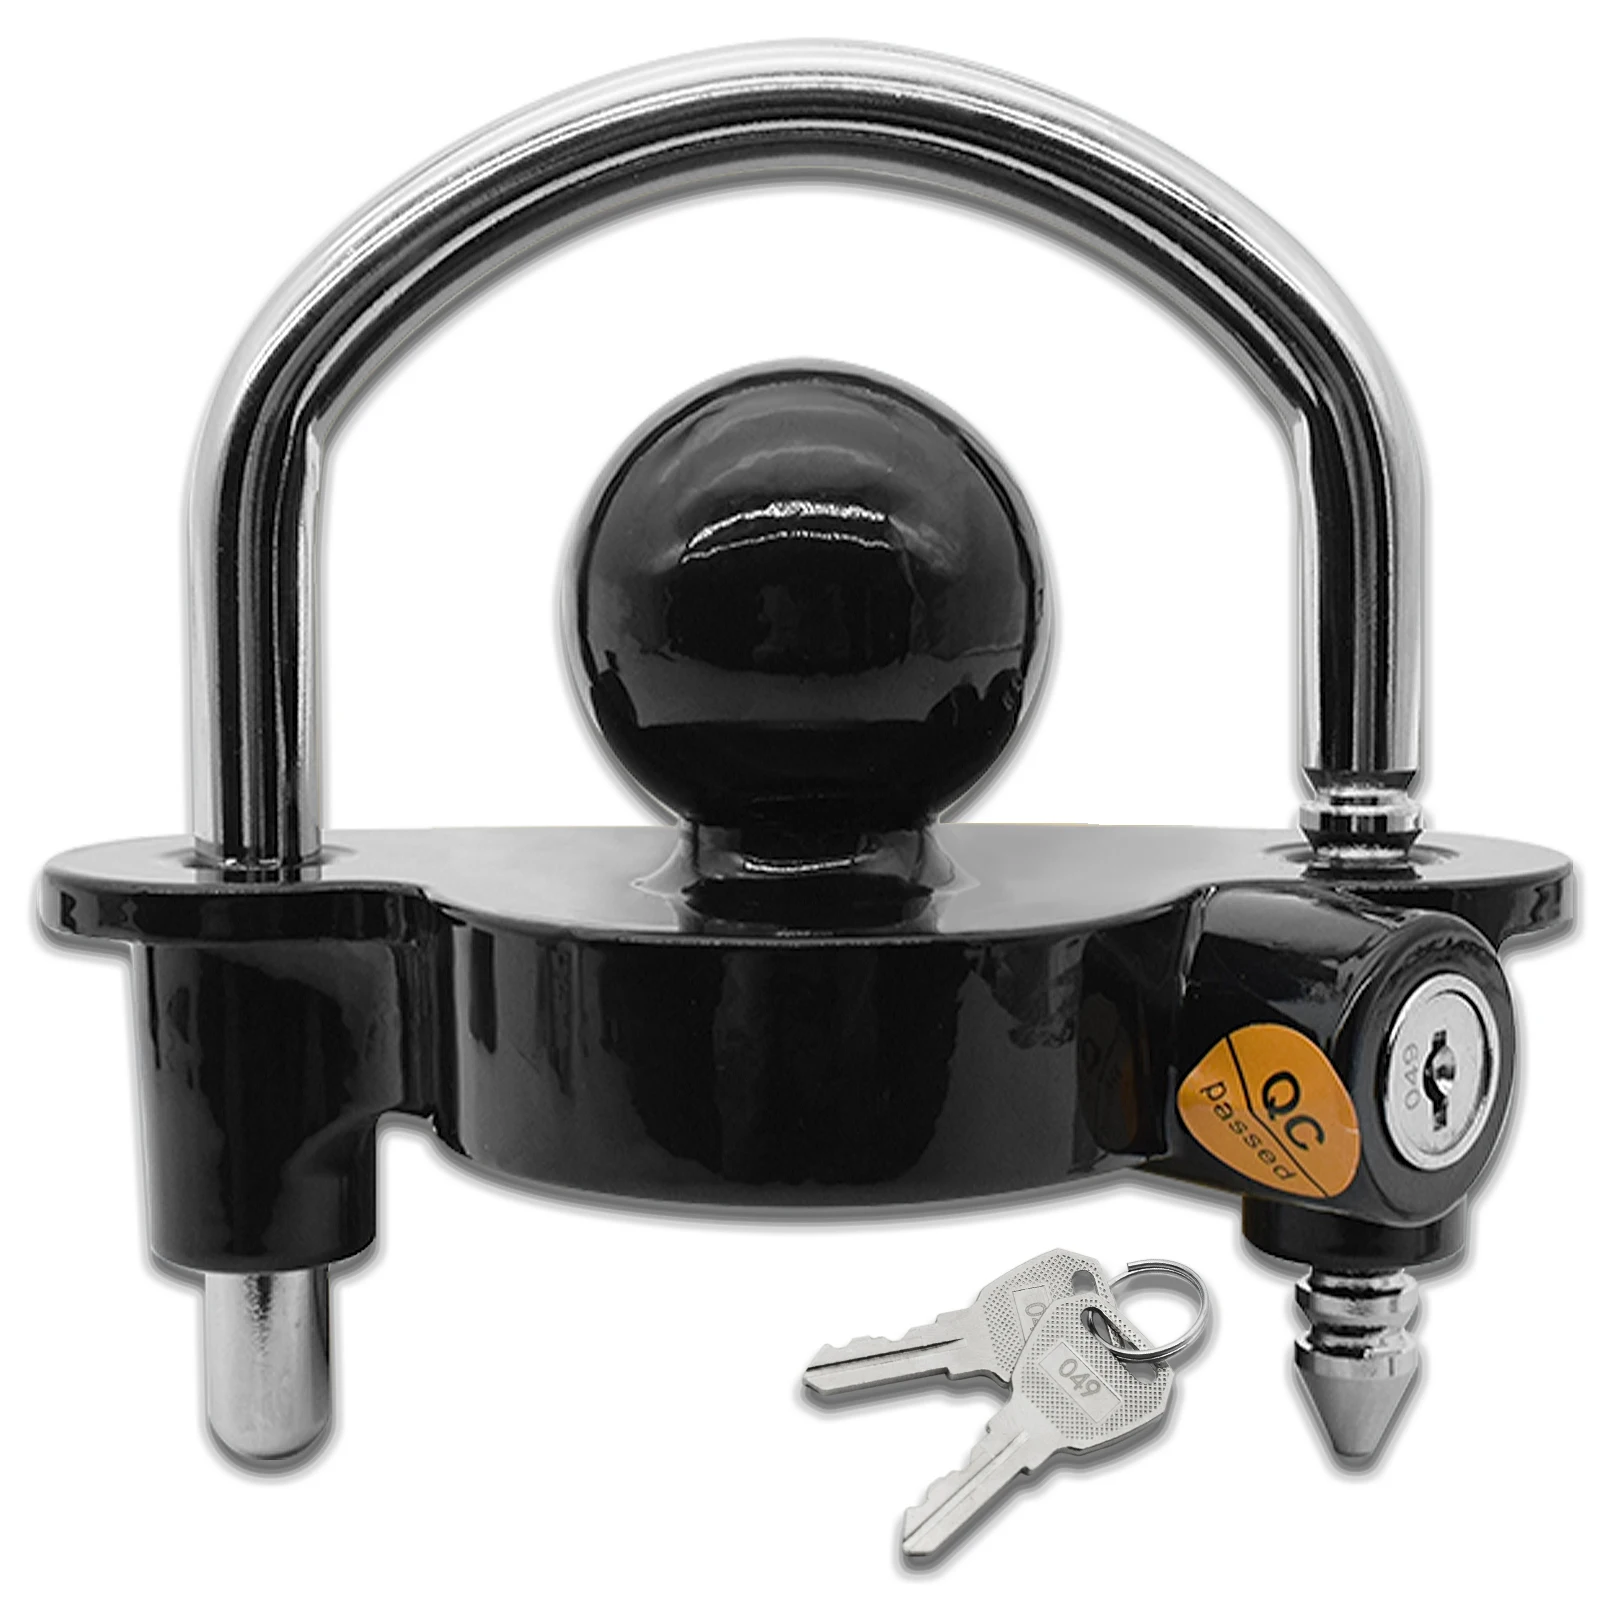 Heavy-Duty Hook Lock Universal Caravan Accessories Trailer Ball Coupler Safe Security Anti-Theft Lock